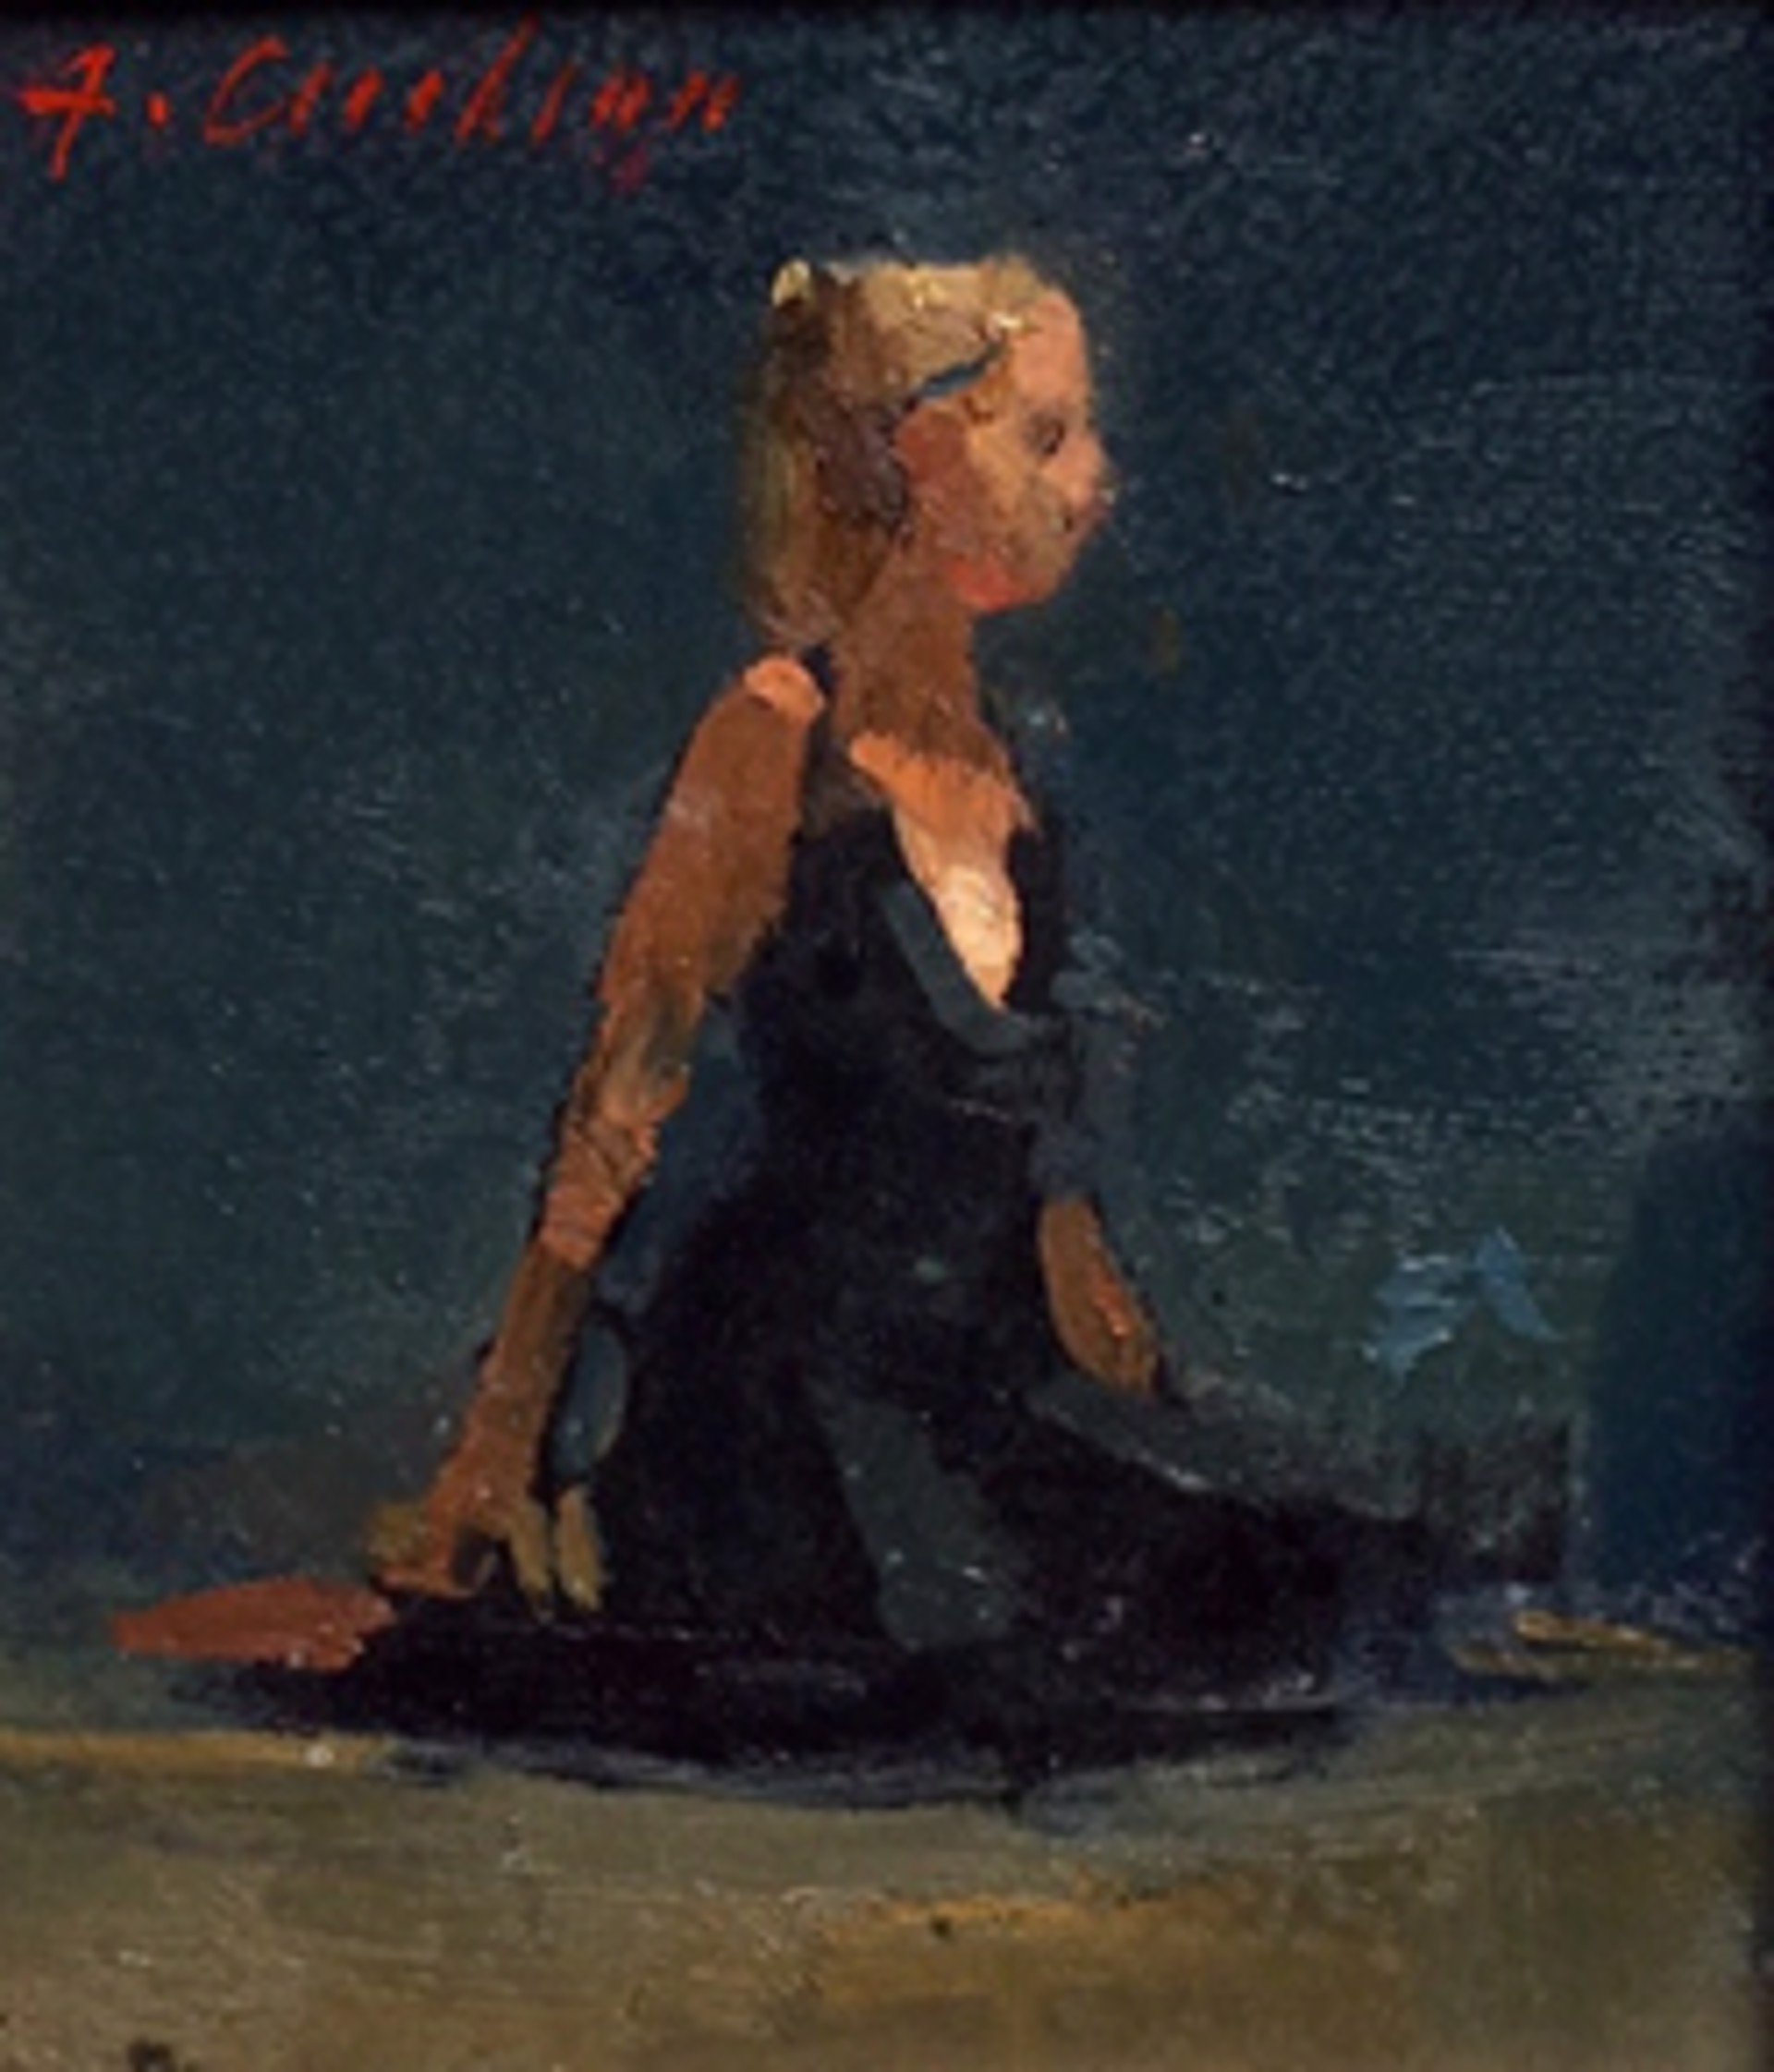 No. 47 (seated figure) by Aimee Erickson, PAPA & OPA